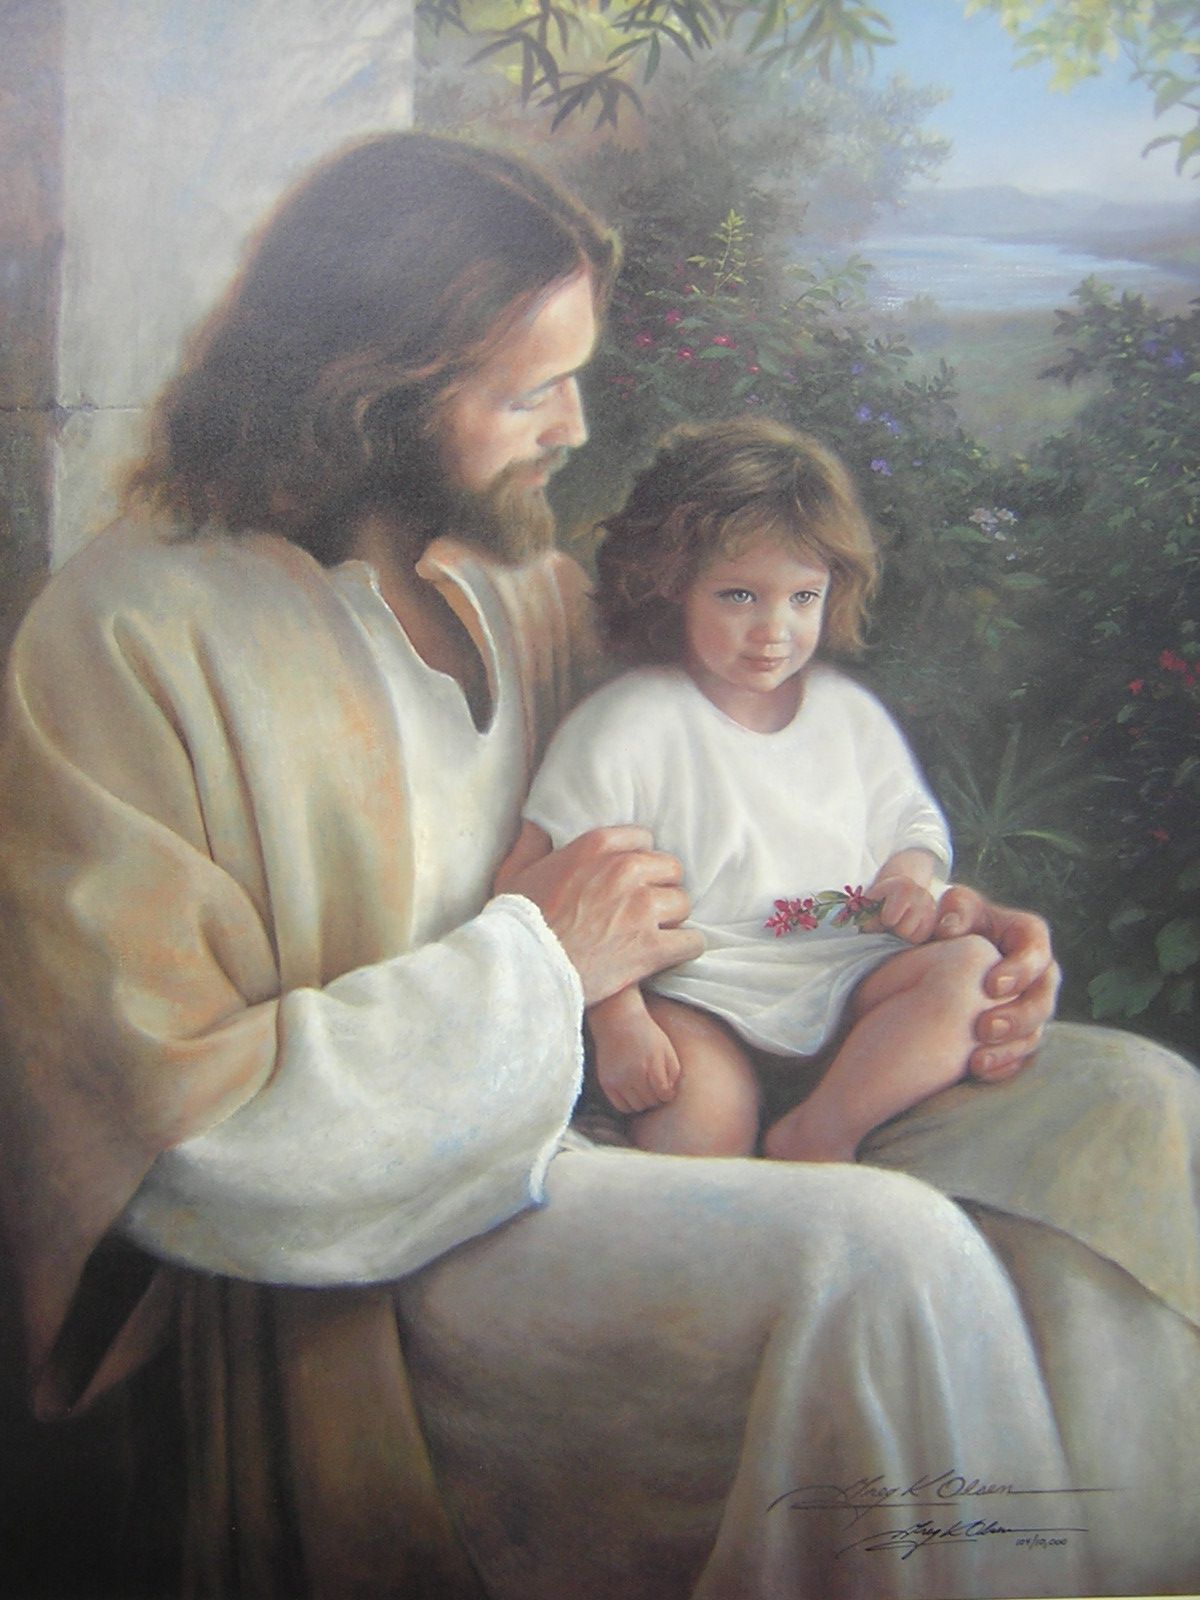 Jesus Children Pictures | Download Free Images on Unsplash